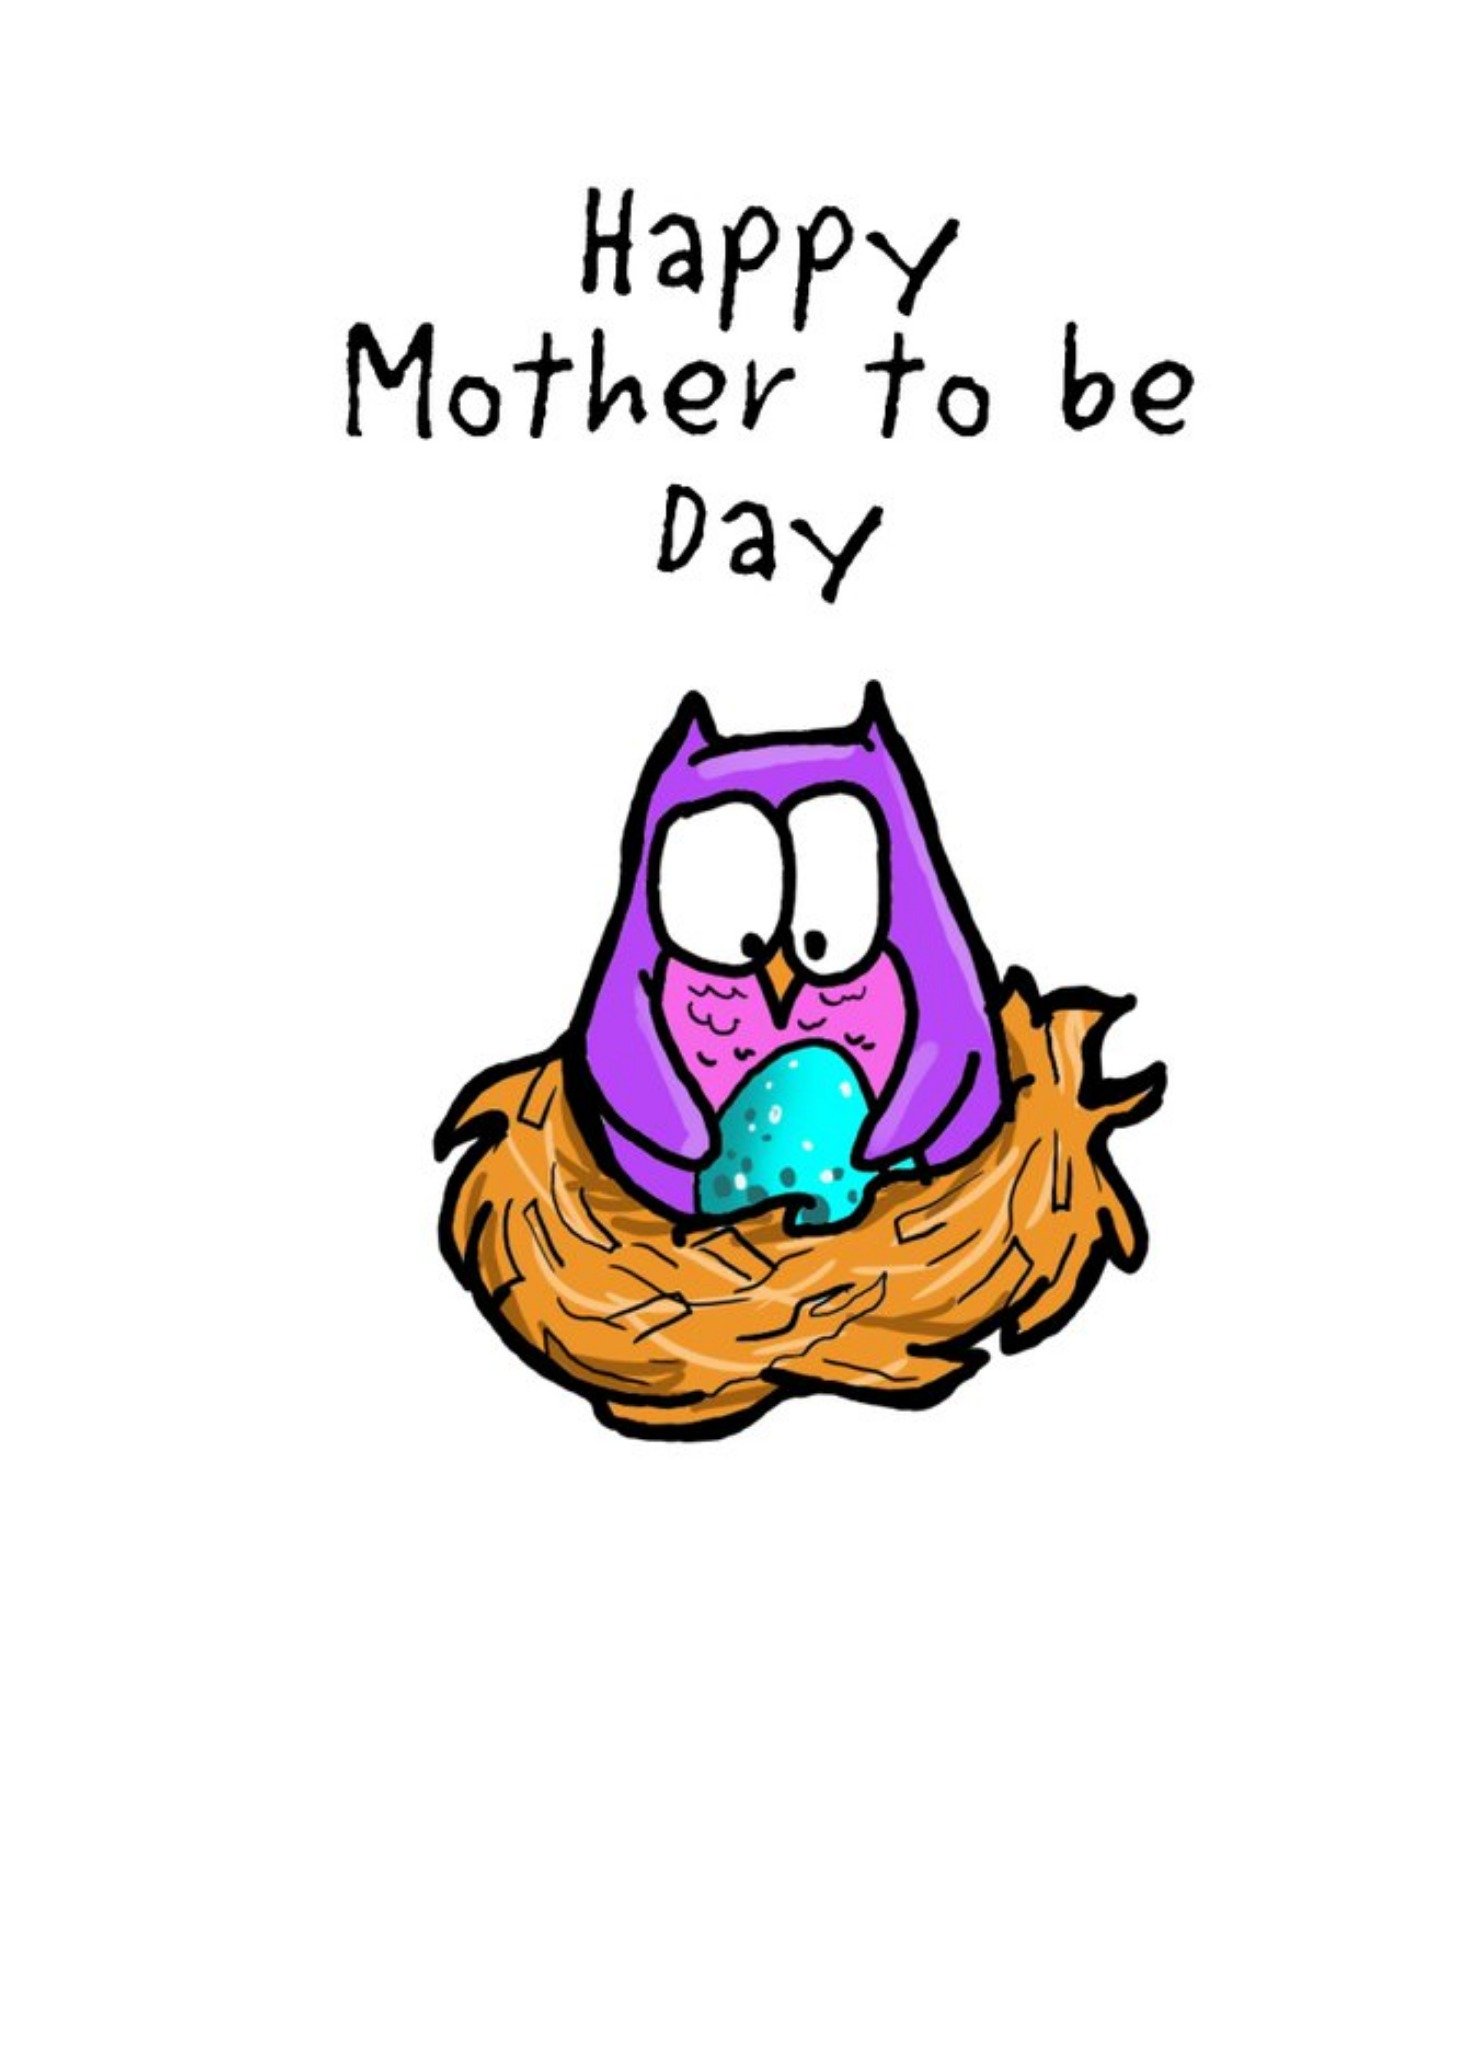 Moonpig Karen Flanart Pregnancy Mother's Day Funny Cute Card, Large